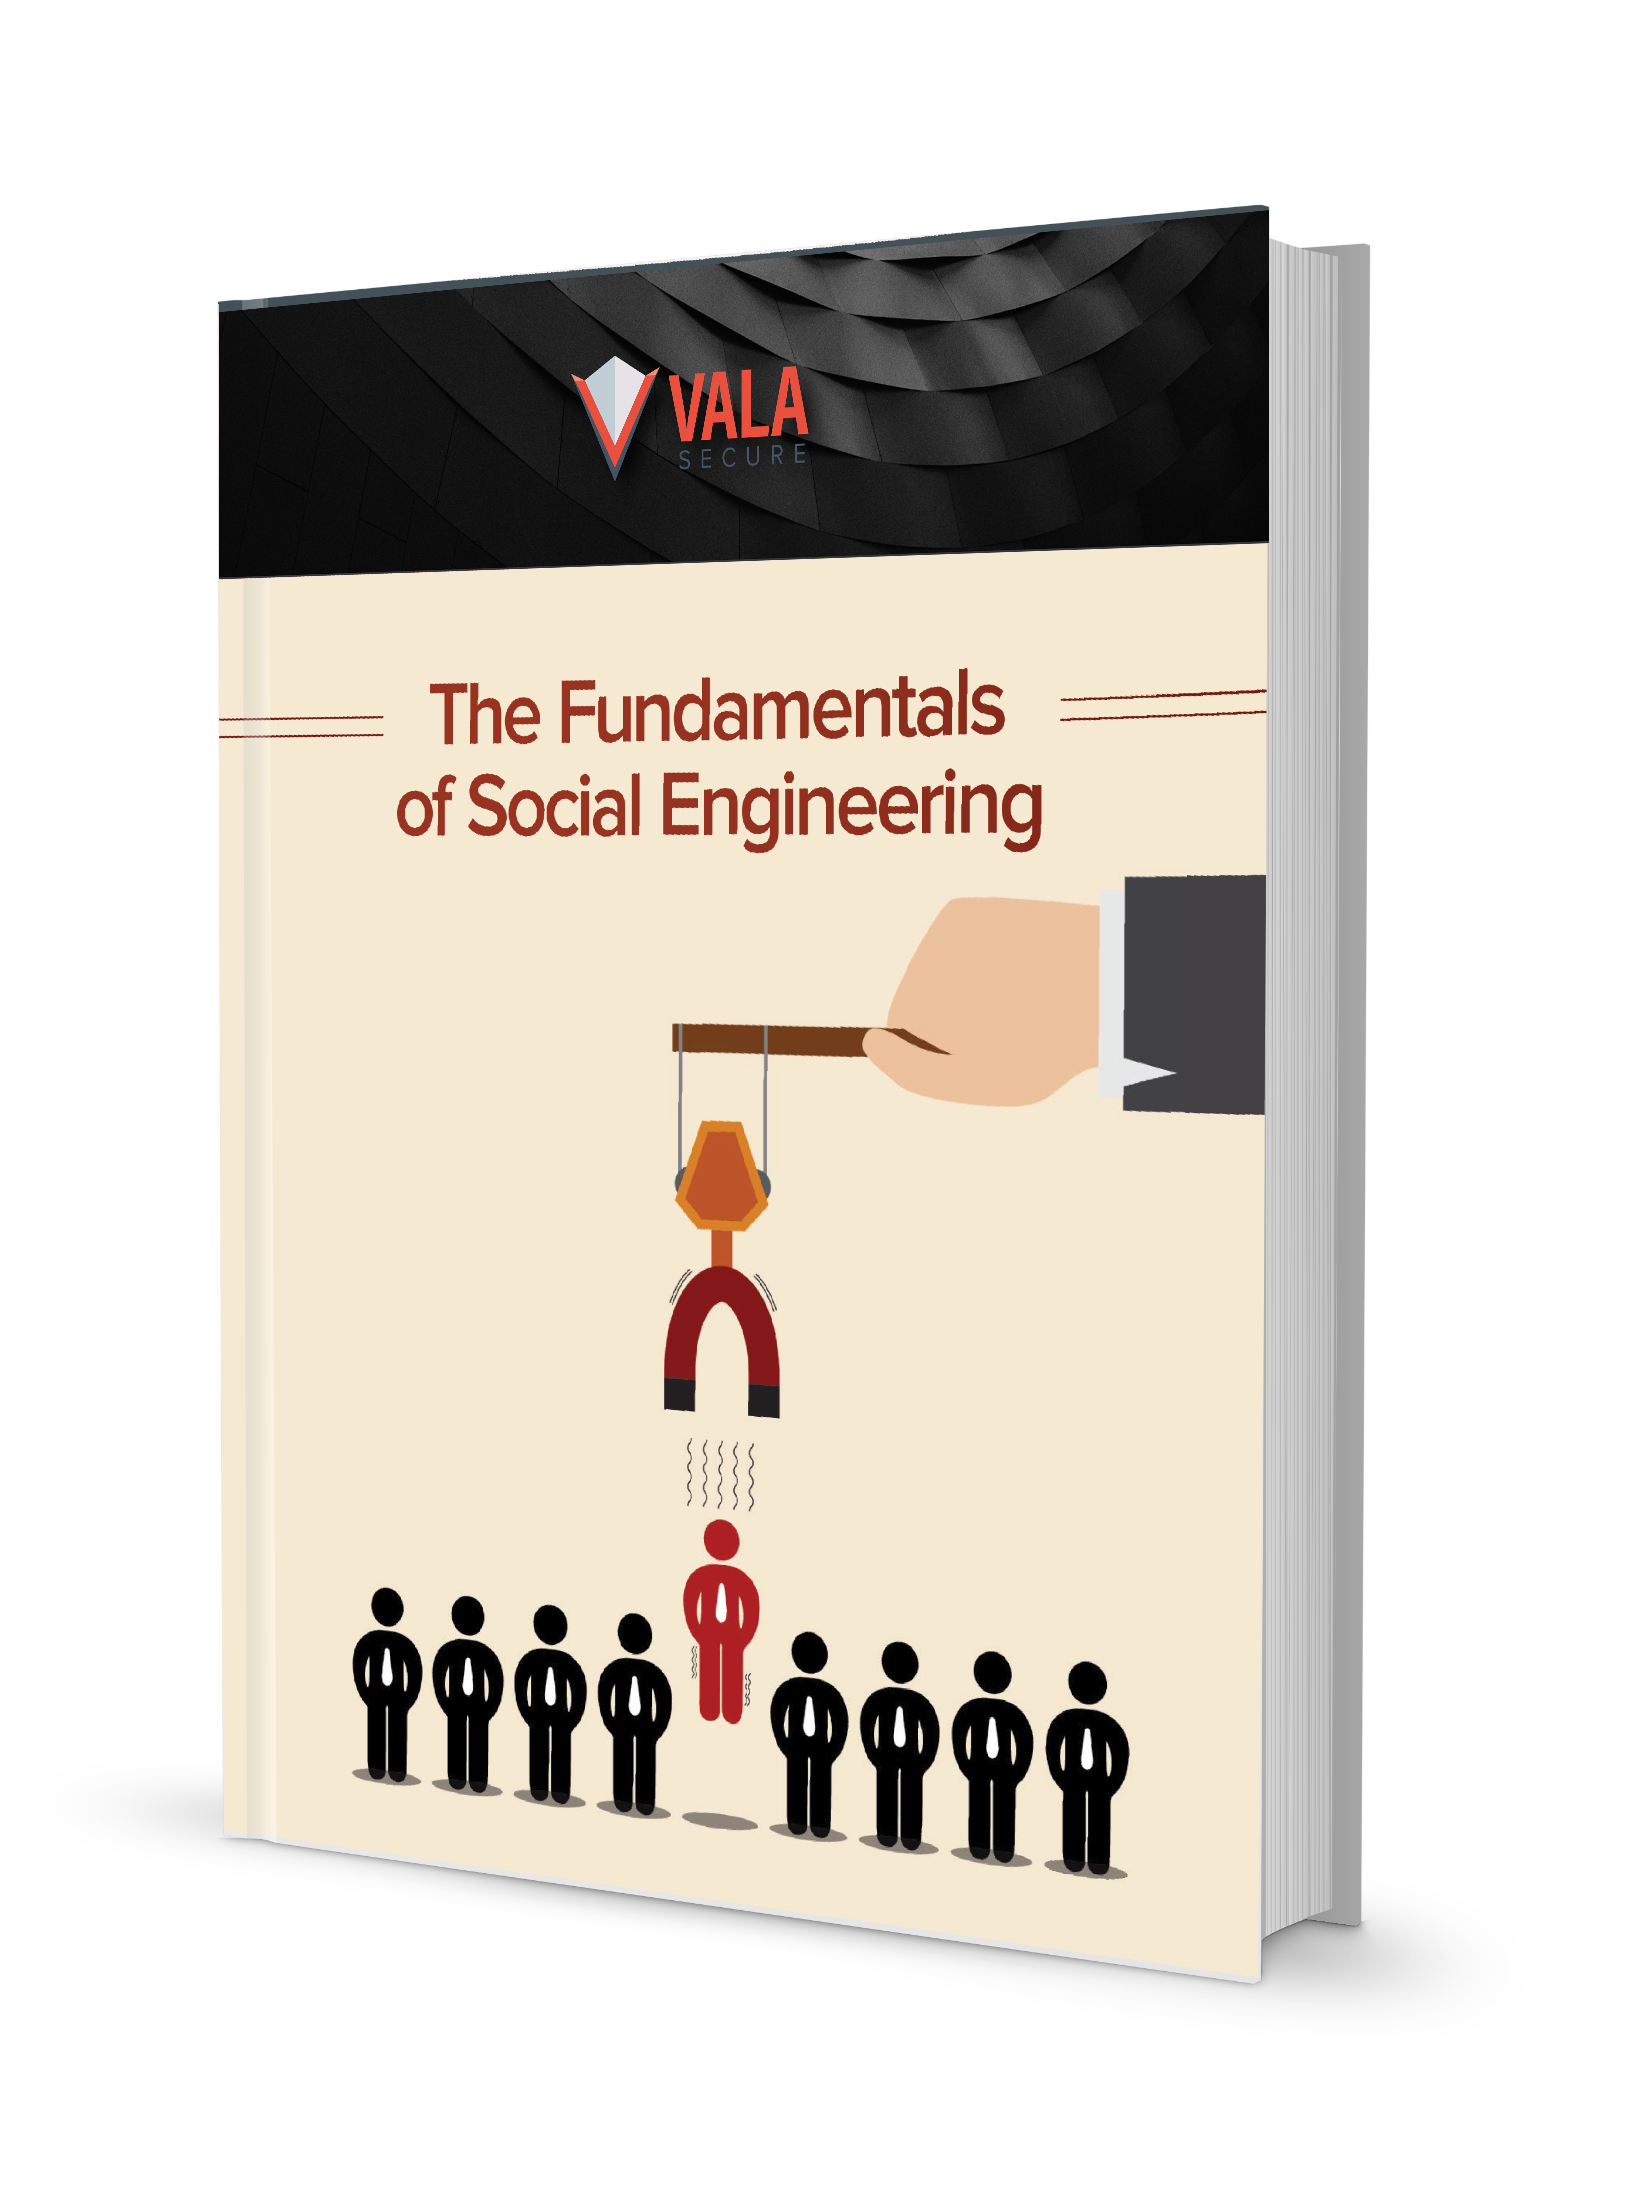 SocialEngineeringeBook-mockup-1